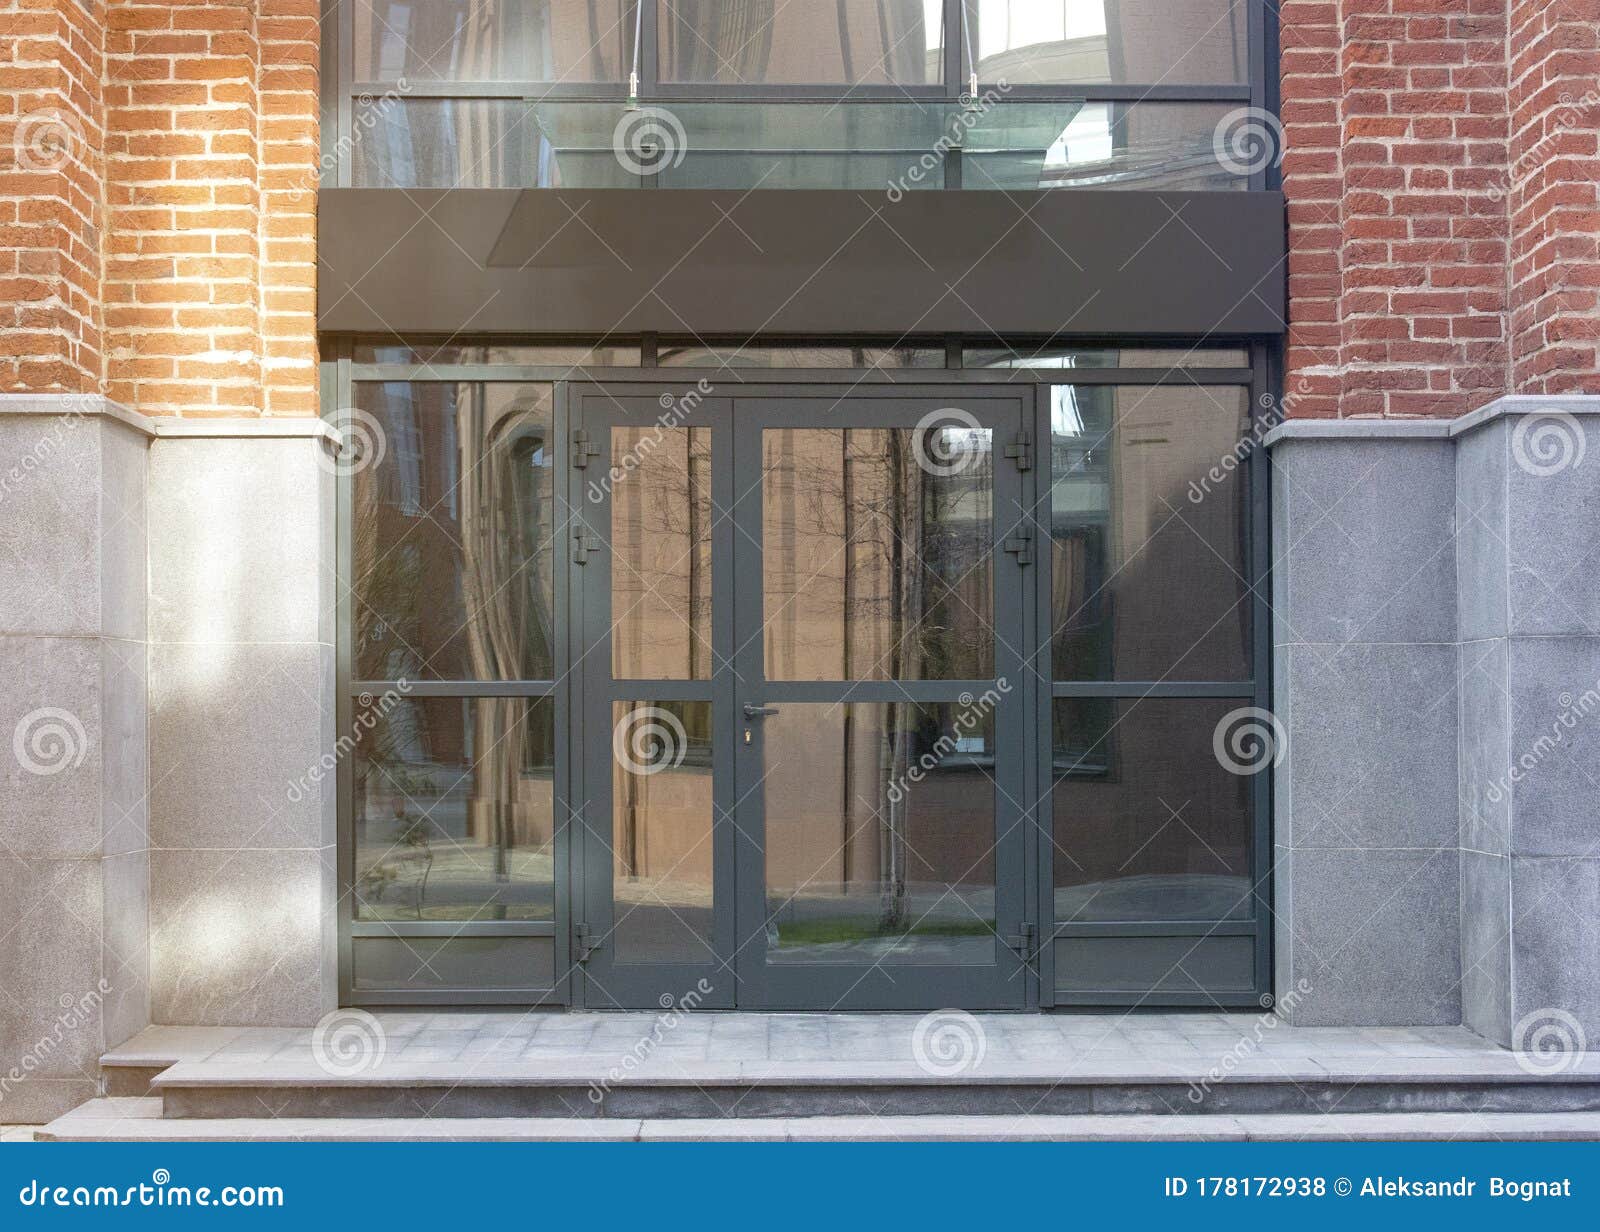 blank black rectangular box store entrance mockup, glass brick wall